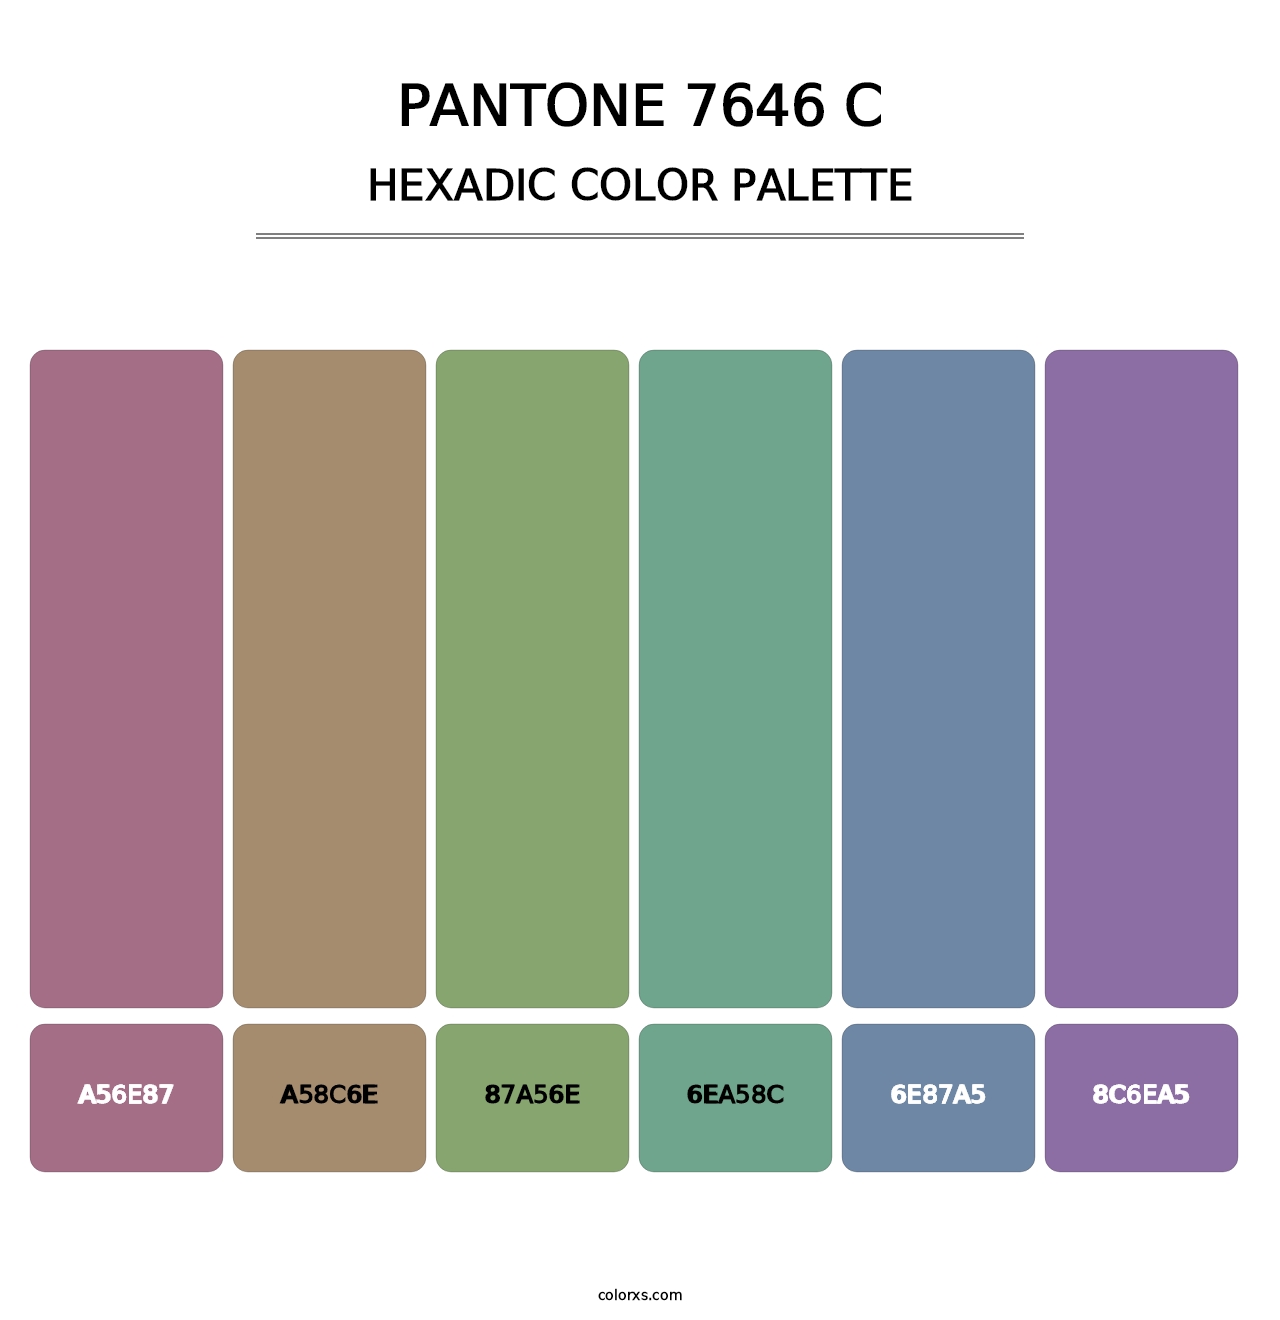 PANTONE 7646 C - Hexadic Color Palette